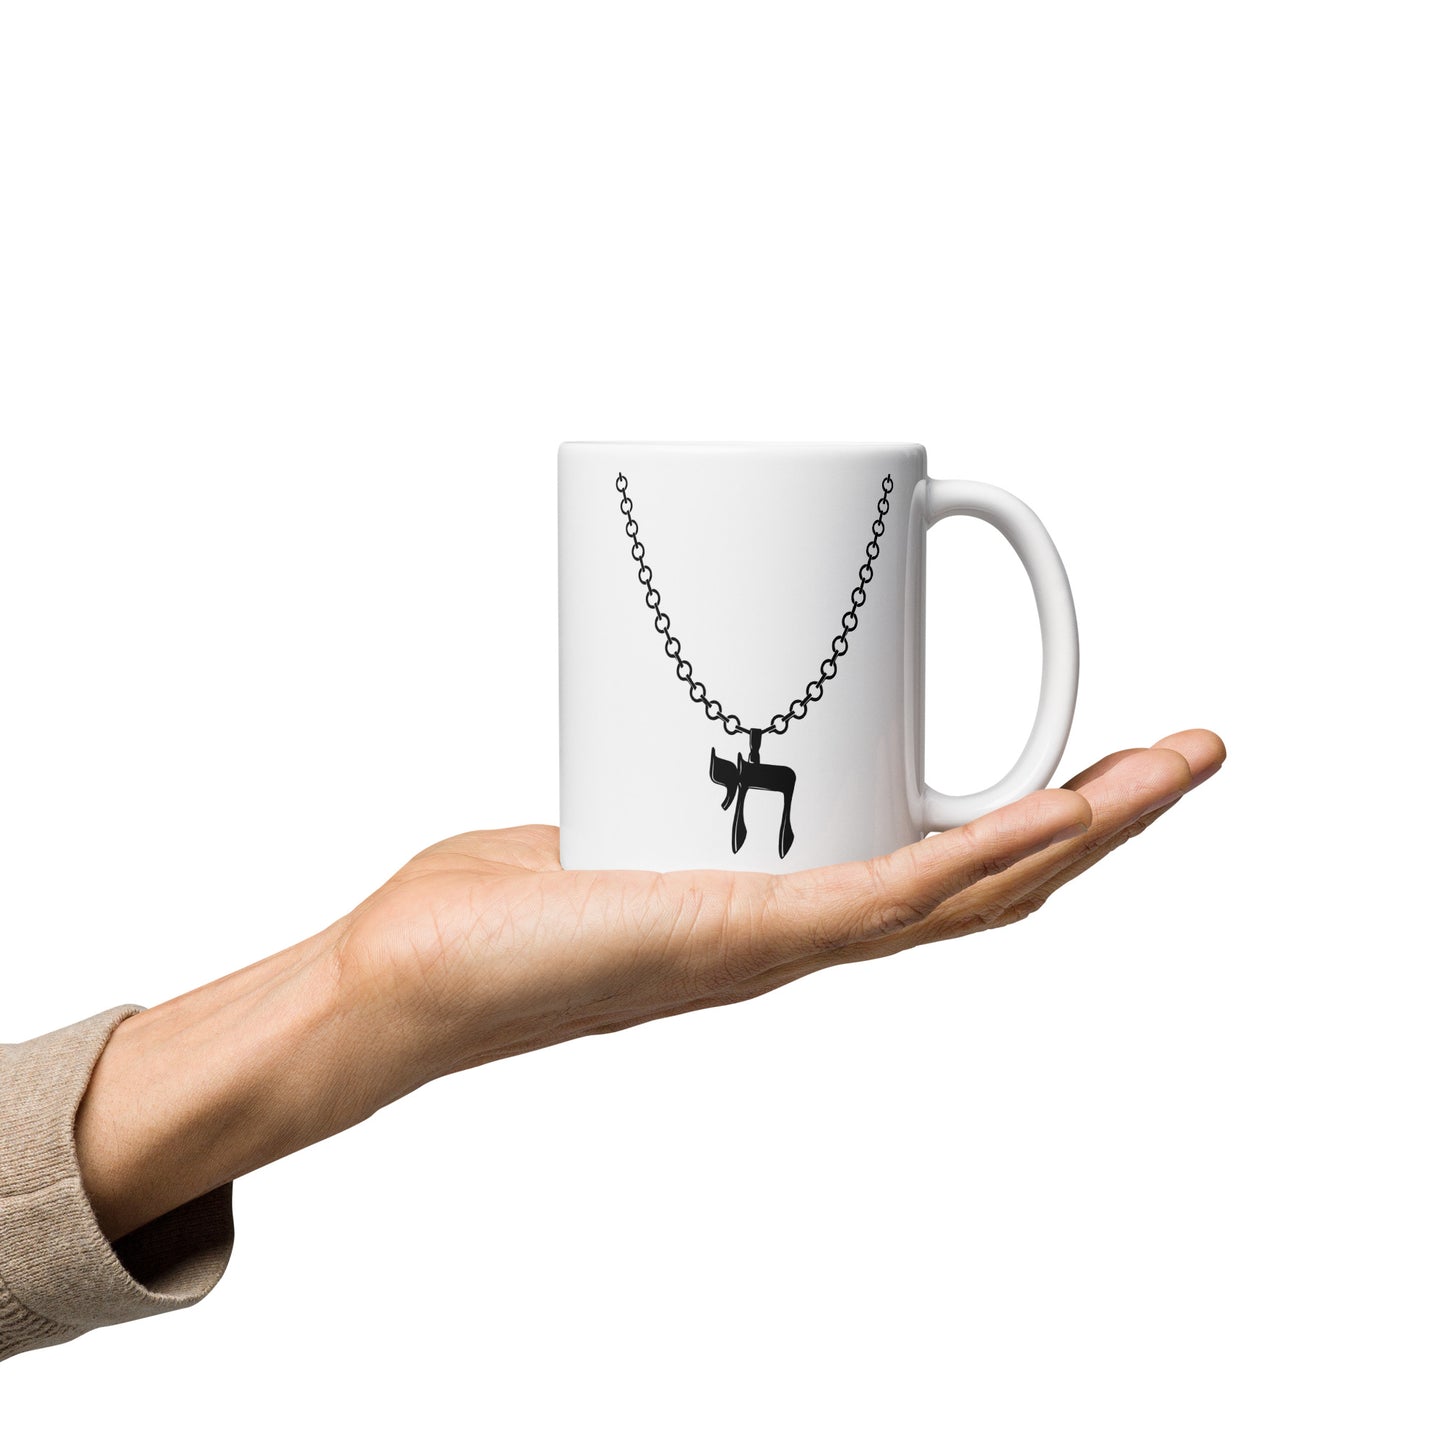 Chai chain - White glossy mug